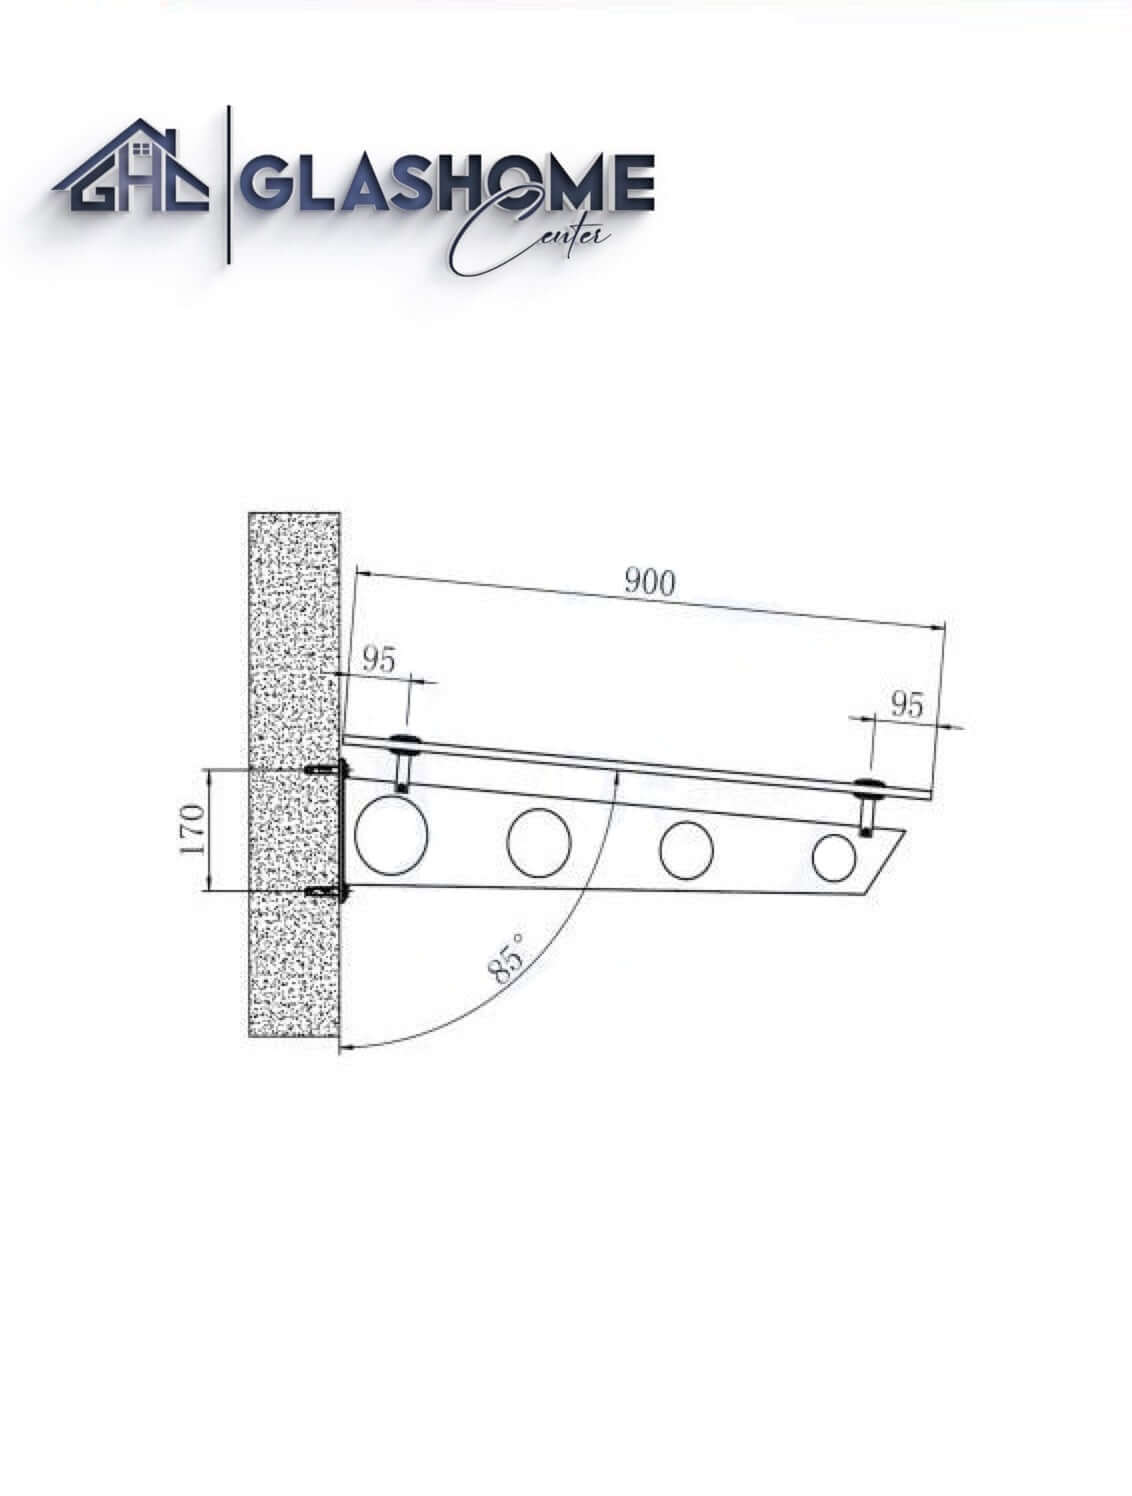 GlasHomeCenter - Glasvordach - Klarglas - 190x90cm - 13.1mm VSG - inkl. 2 Edelstahlhalterungen Variante "Stockholm"